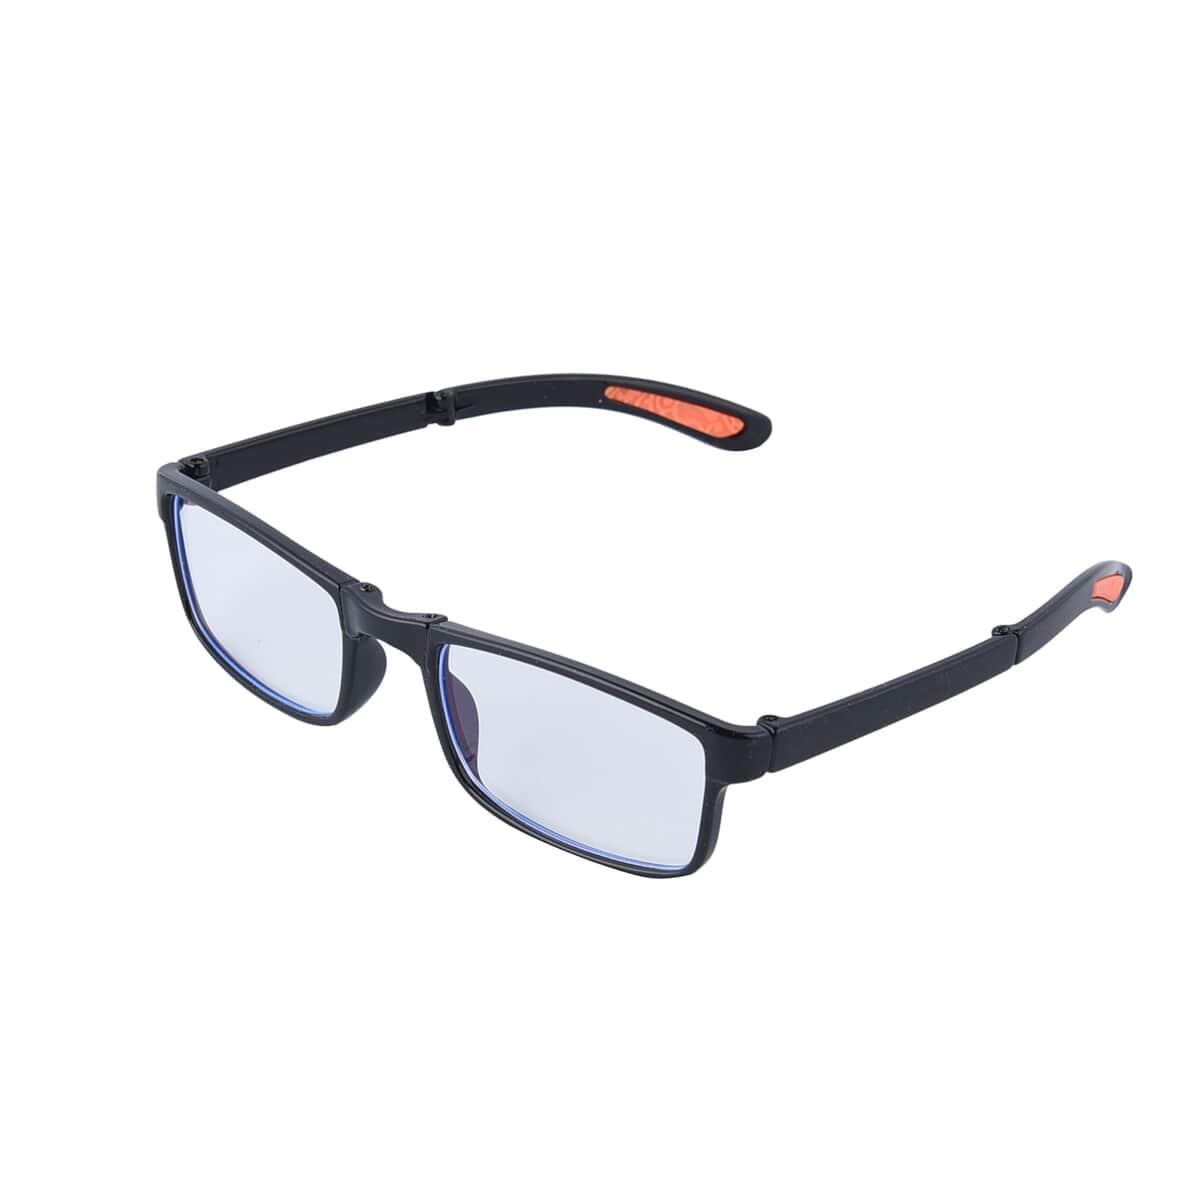 Foldable Anti-Blue Light Glasses with Testing kit - Black & PU Leather 5.71" x 5.51" x 1.18" image number 1